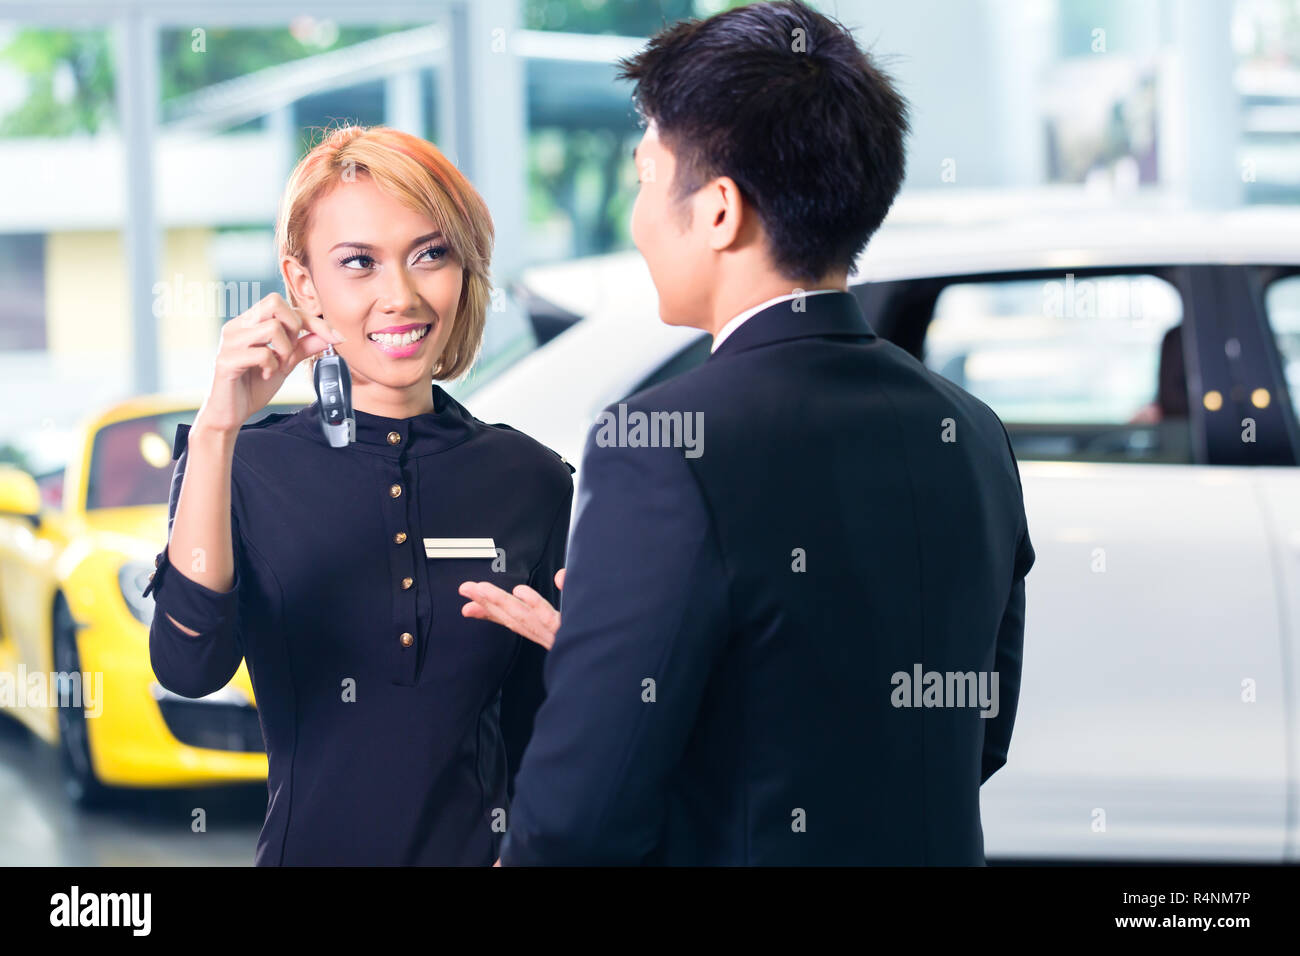 Asian man at car rental receiving key Stock Photo